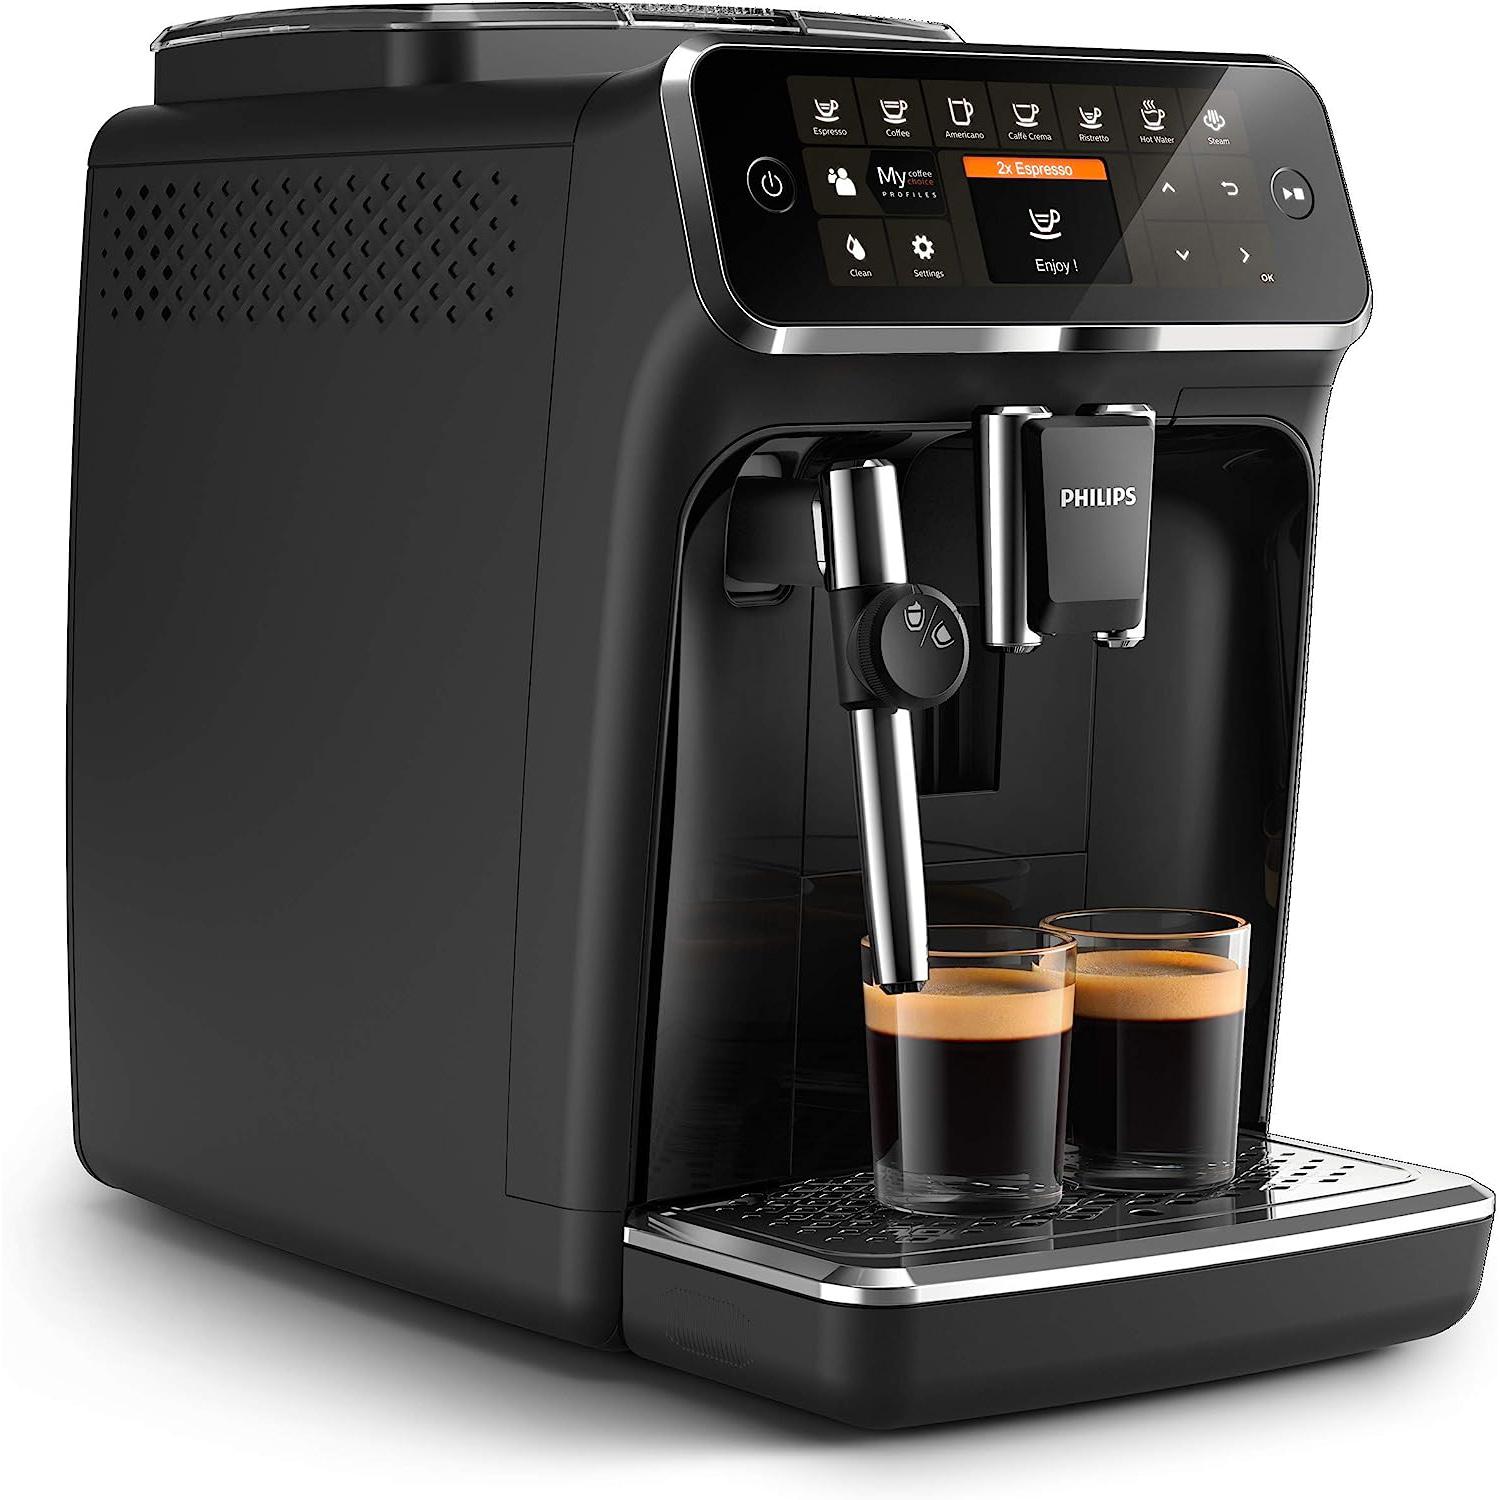 Philips 4300 Series EP4321 Lattego Superautomatic Espresso Machine $549 Shipped